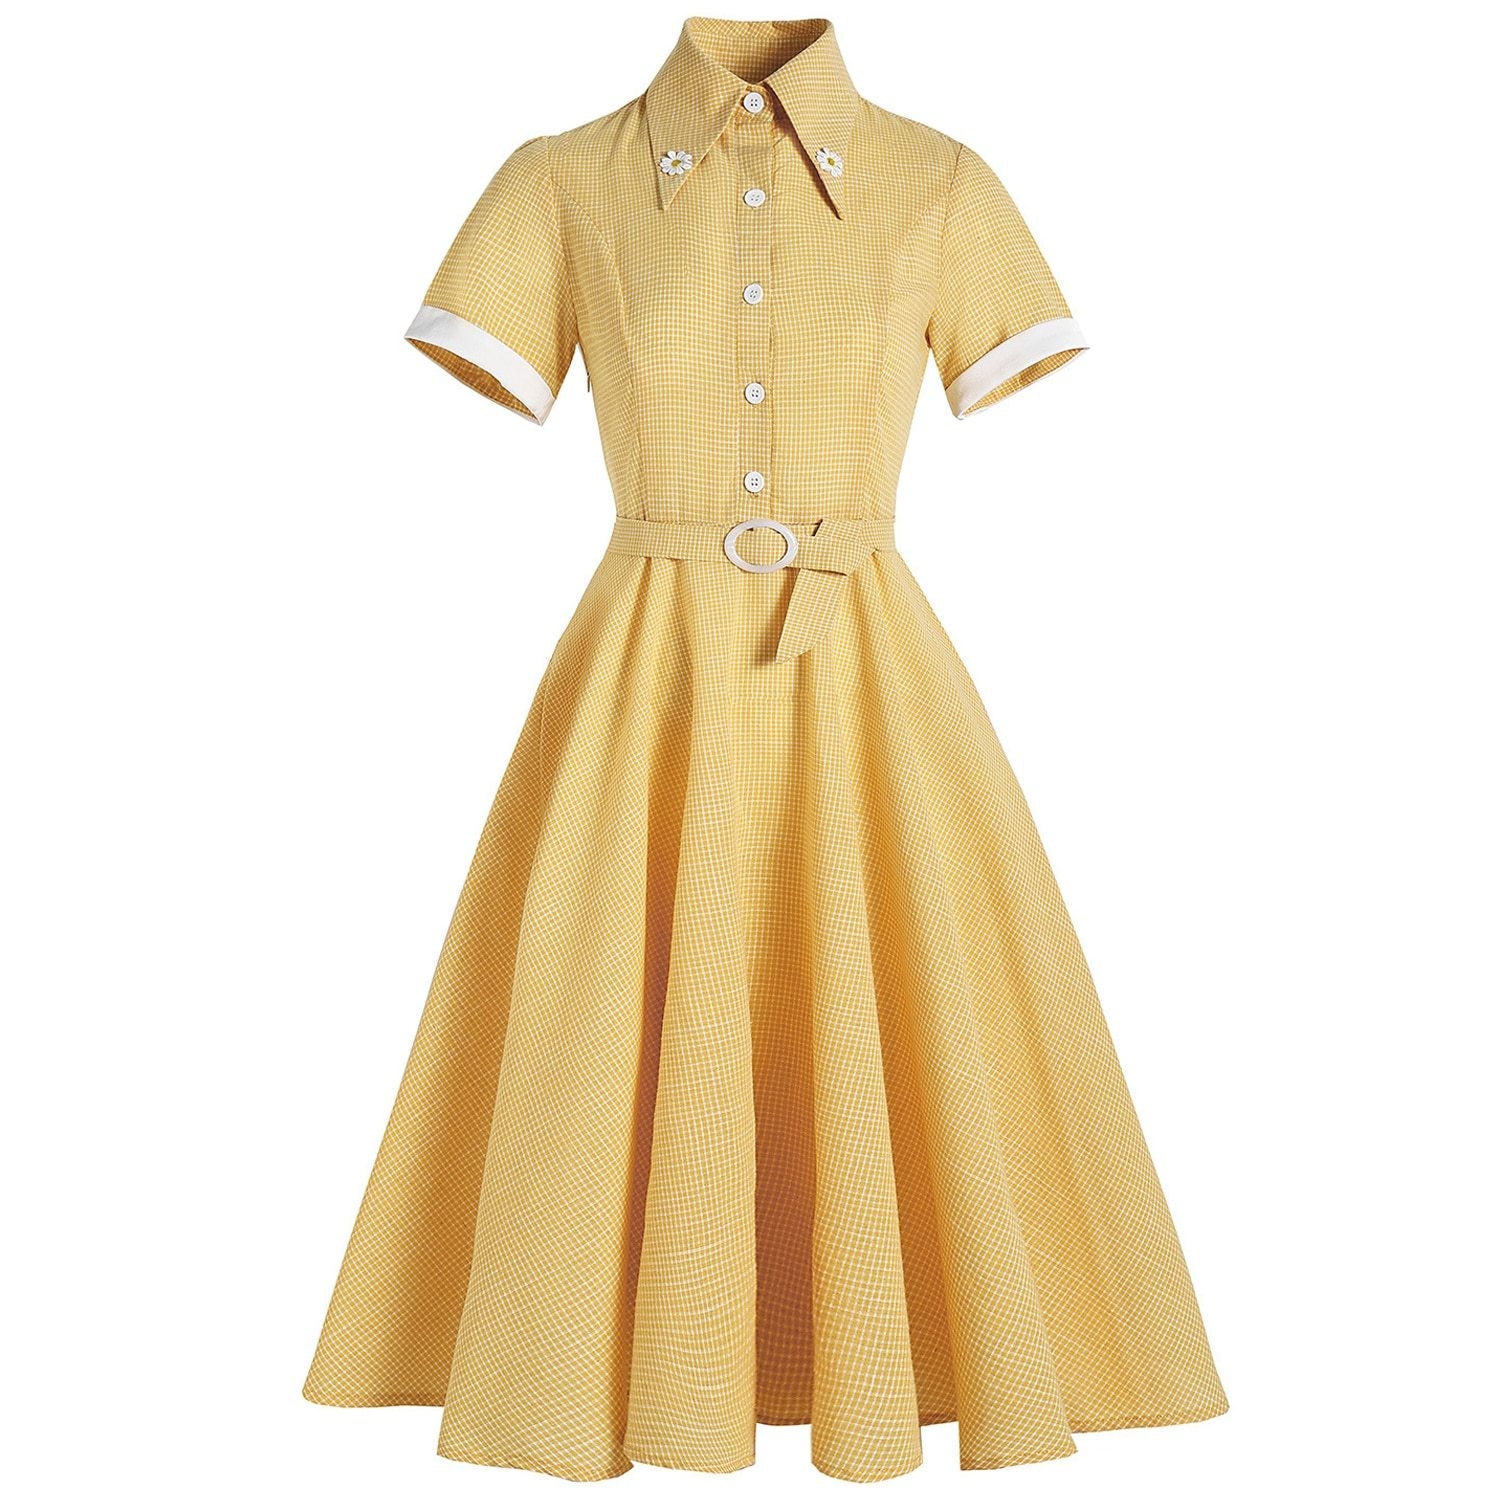 2021 Hepburn Style Shirt Summer Women Dress With Belt Vintage England Plaid Yellow Floral Short Sleeve Swing Pin Up Sundress